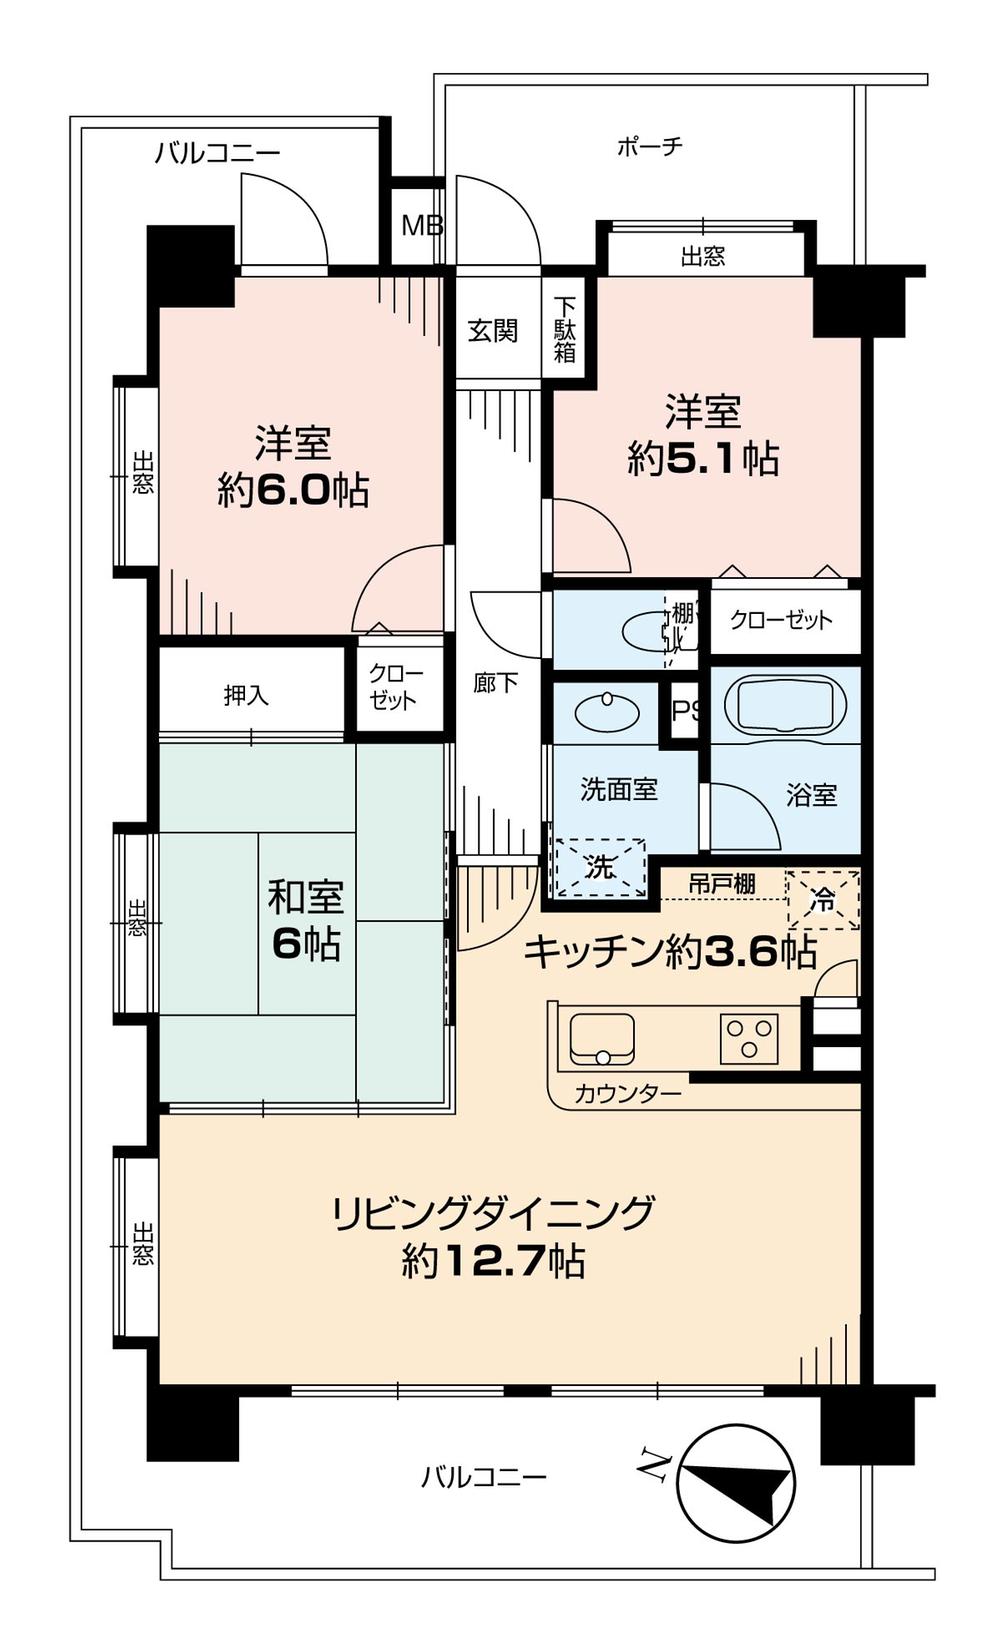 Floor plan. 3LDK, Price 21.9 million yen, Footprint 70.2 sq m , Balcony area 25.59 sq m